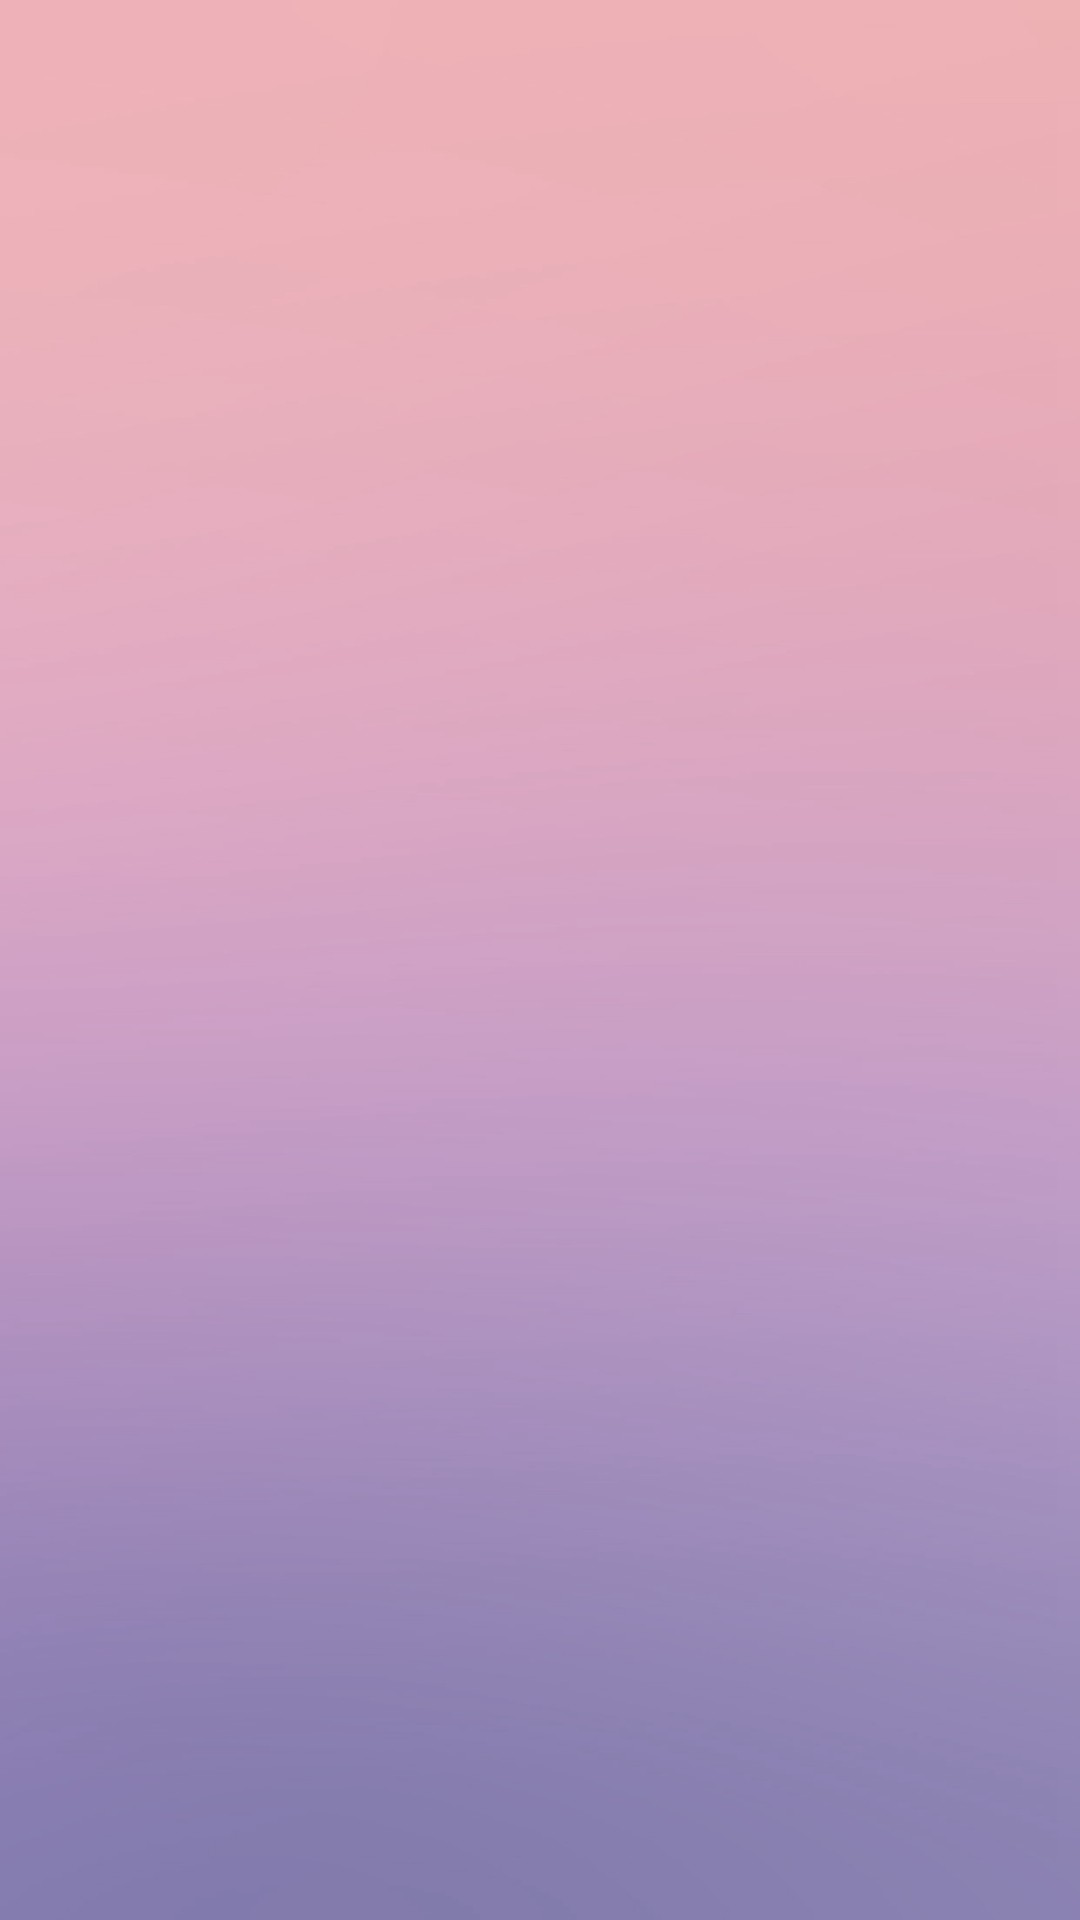 1080x1920 Pink Blue Purple Harmony Gradation Blur iPhone 8 wallpaper